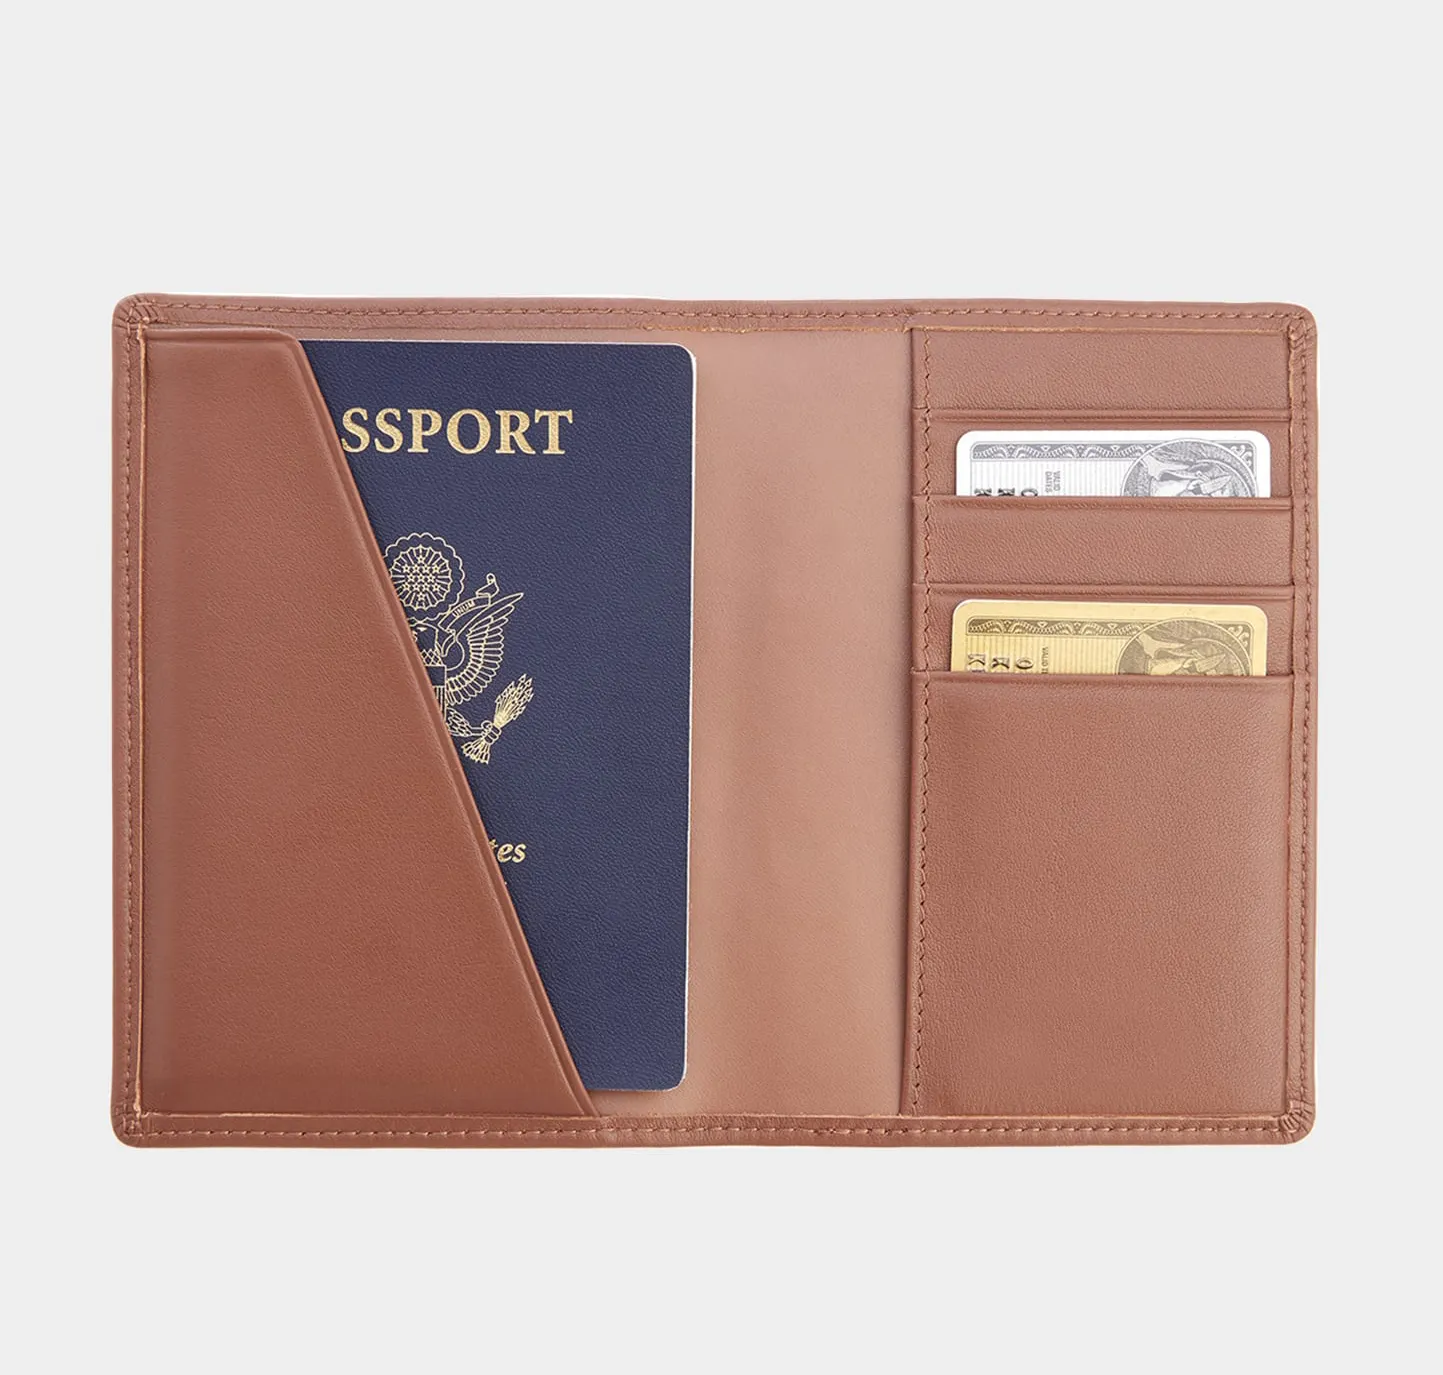 New Passport Cover Protective Travel Credit Card Holder Document Passport Holder Leather Passport Case